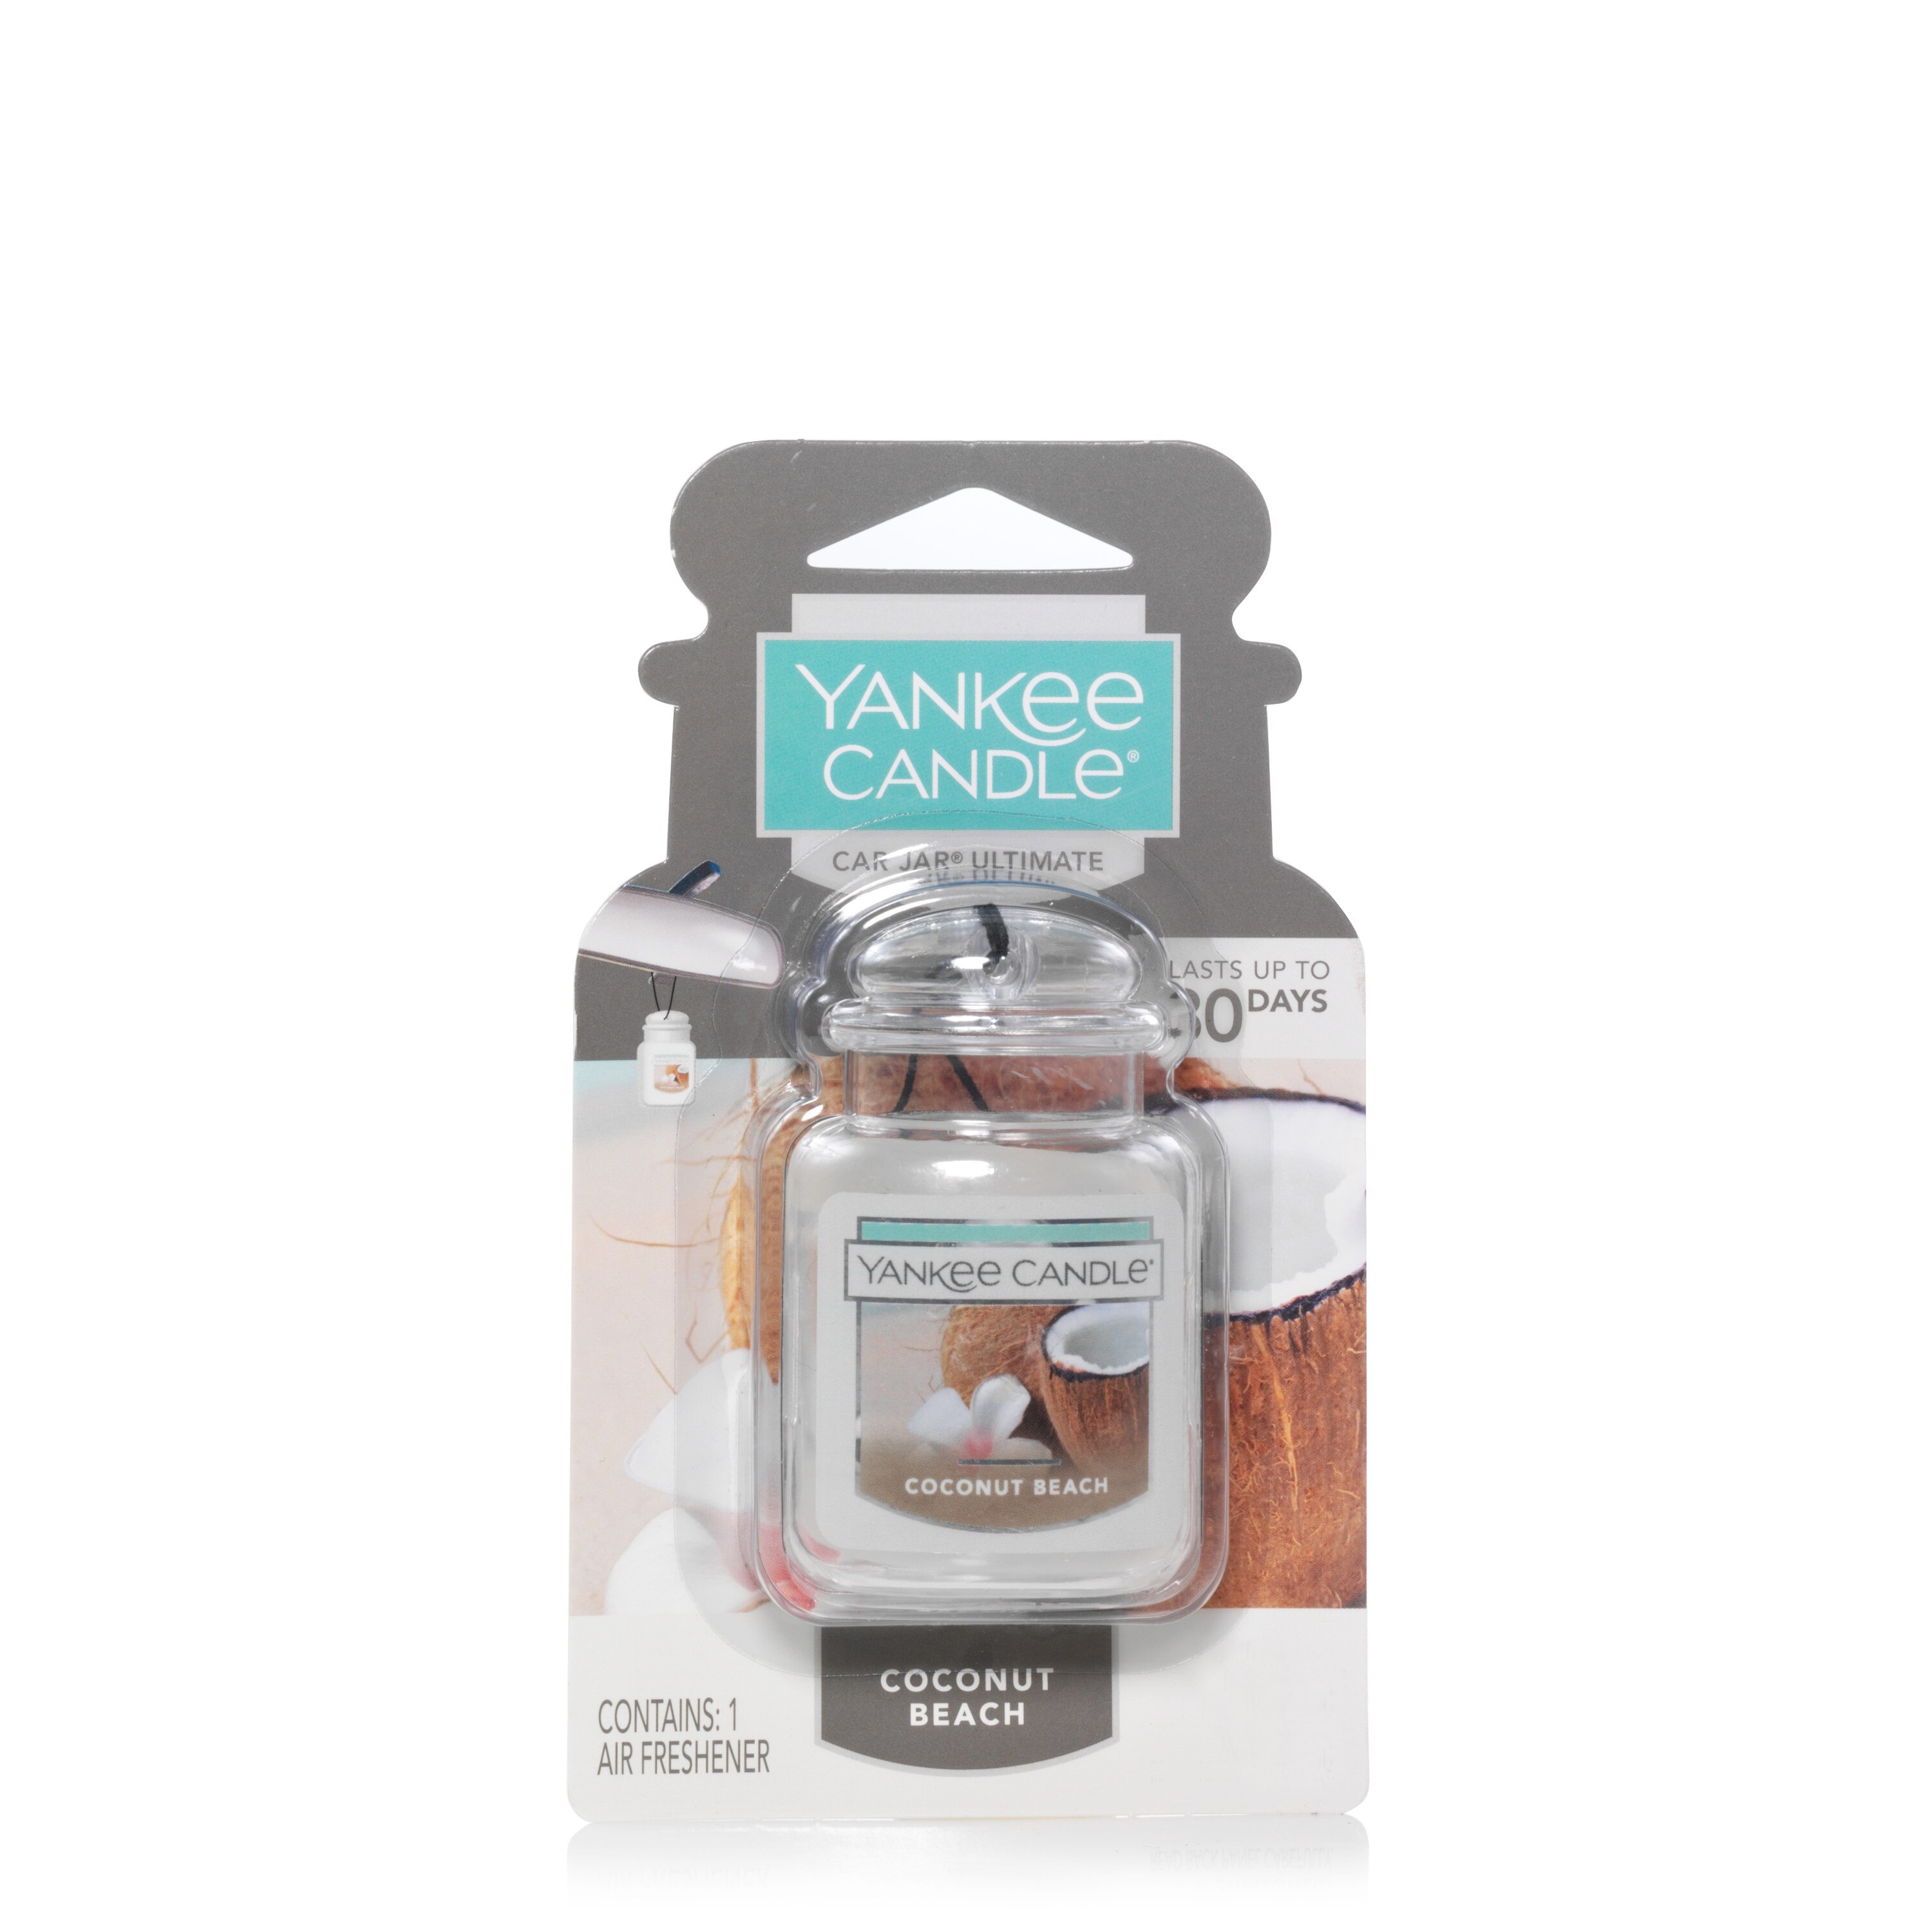 Yankee Candle Coconut Beach Car Jar Ultimate Air Freshener